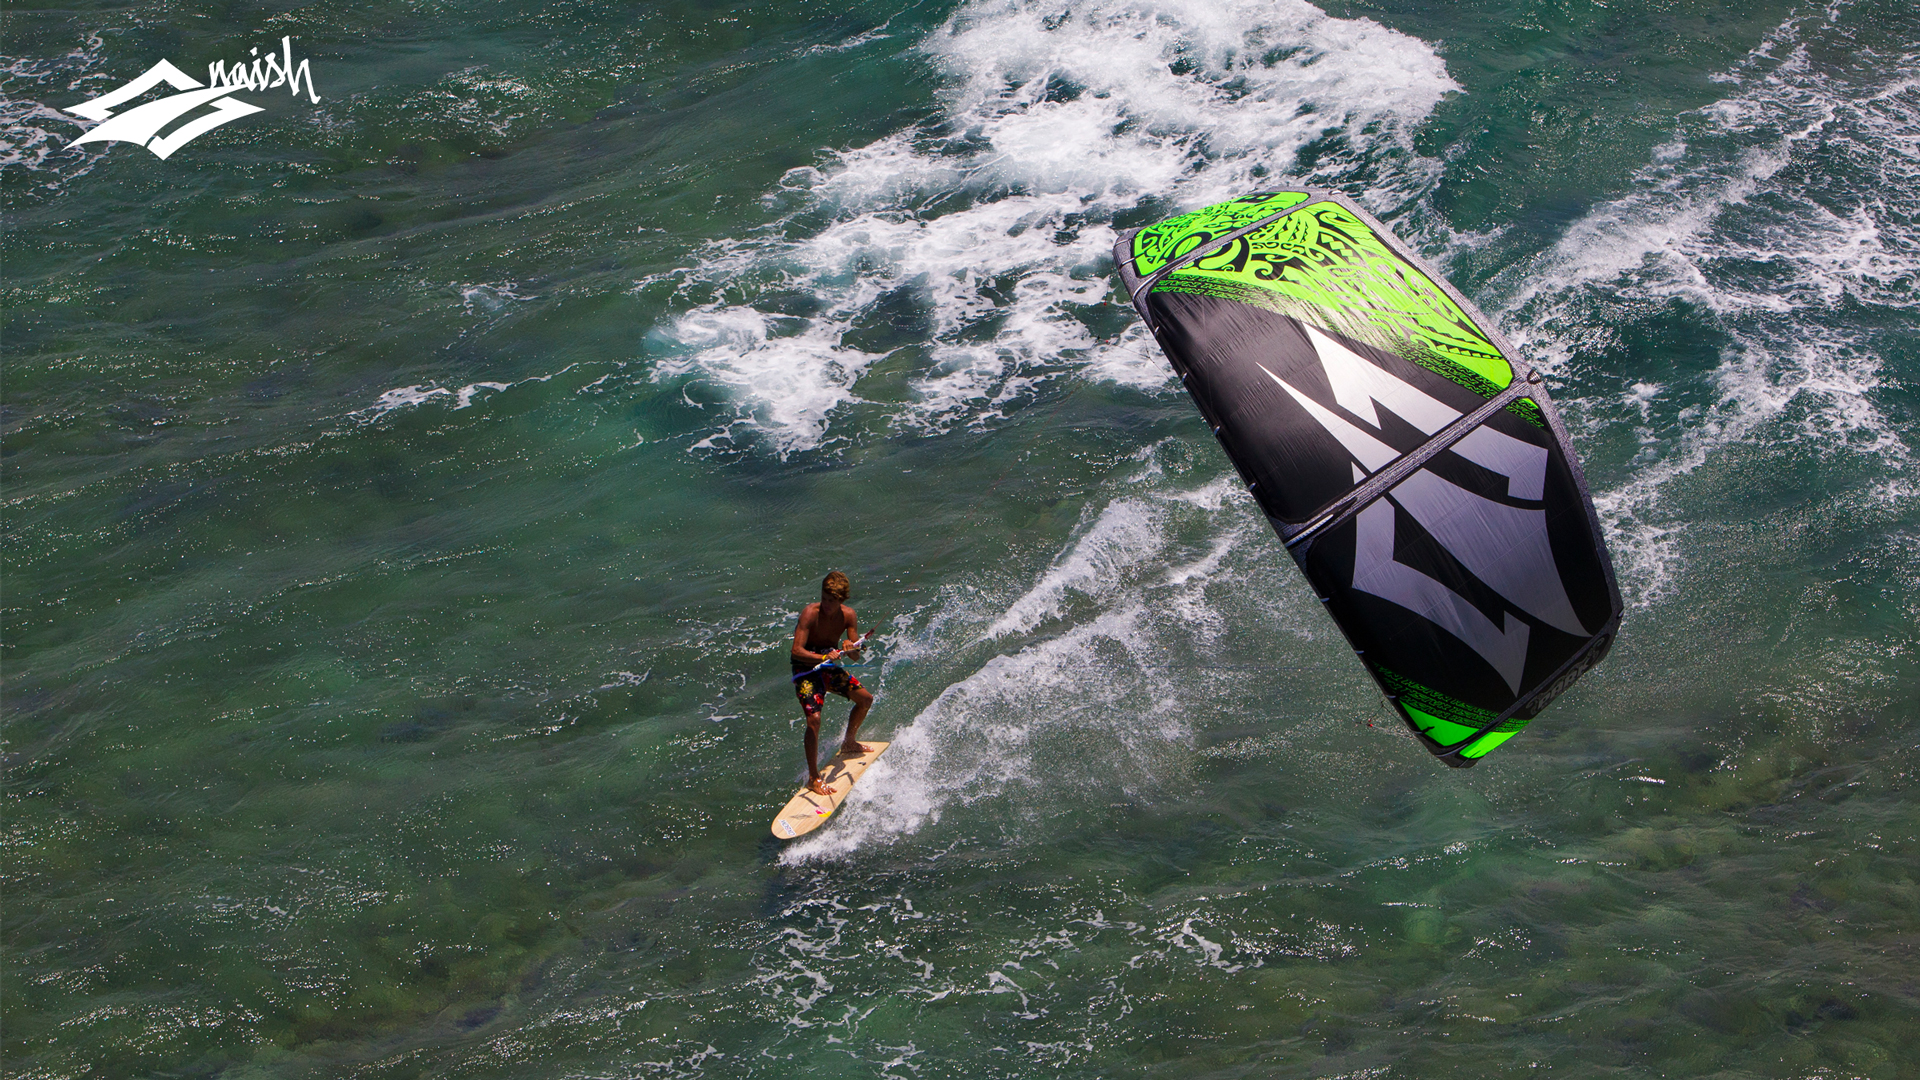 kitesurf wallpaper image - Kai Lenny cruising with the Naish Park kite and Alaia kiteboard off Hawaii - in resolution: High Definition - HD 16:9 1920 X 1080